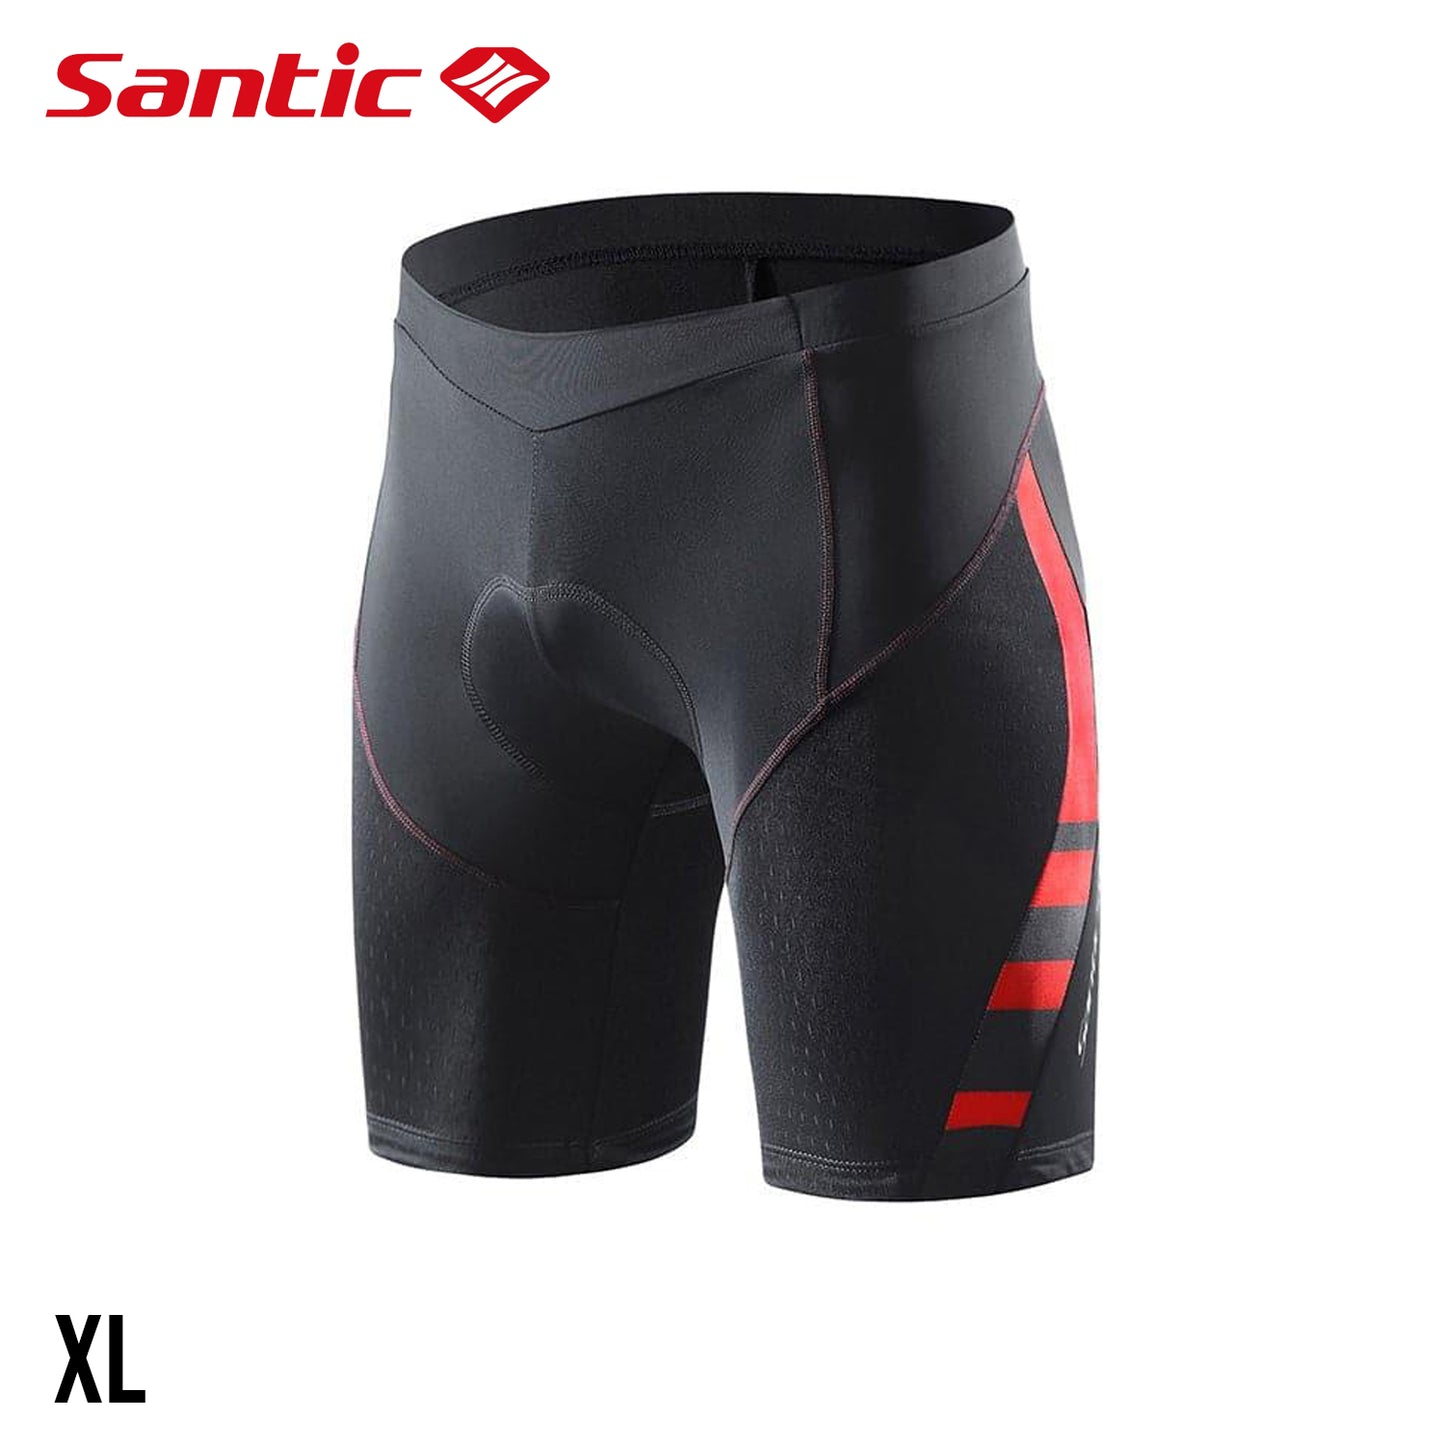 Santic Flames Men's Spring Summer Cycling Shorts - Red